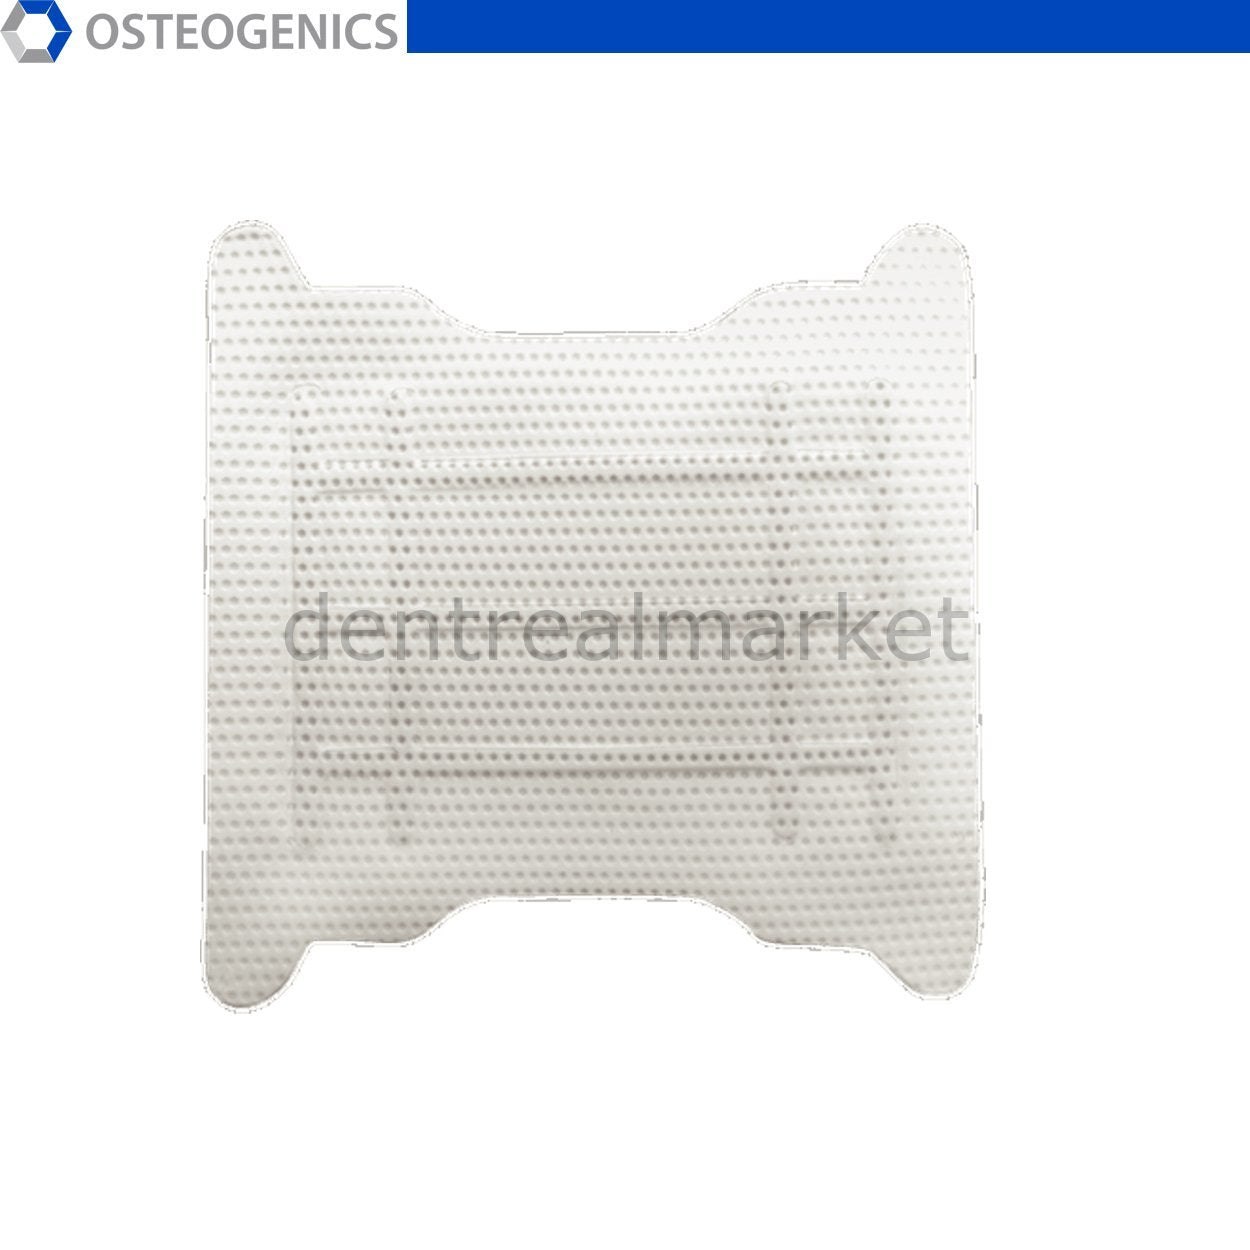 DentrealStore - Osteogenics Cytoplast Titanium Reinforced Membrane - 38x38 mm